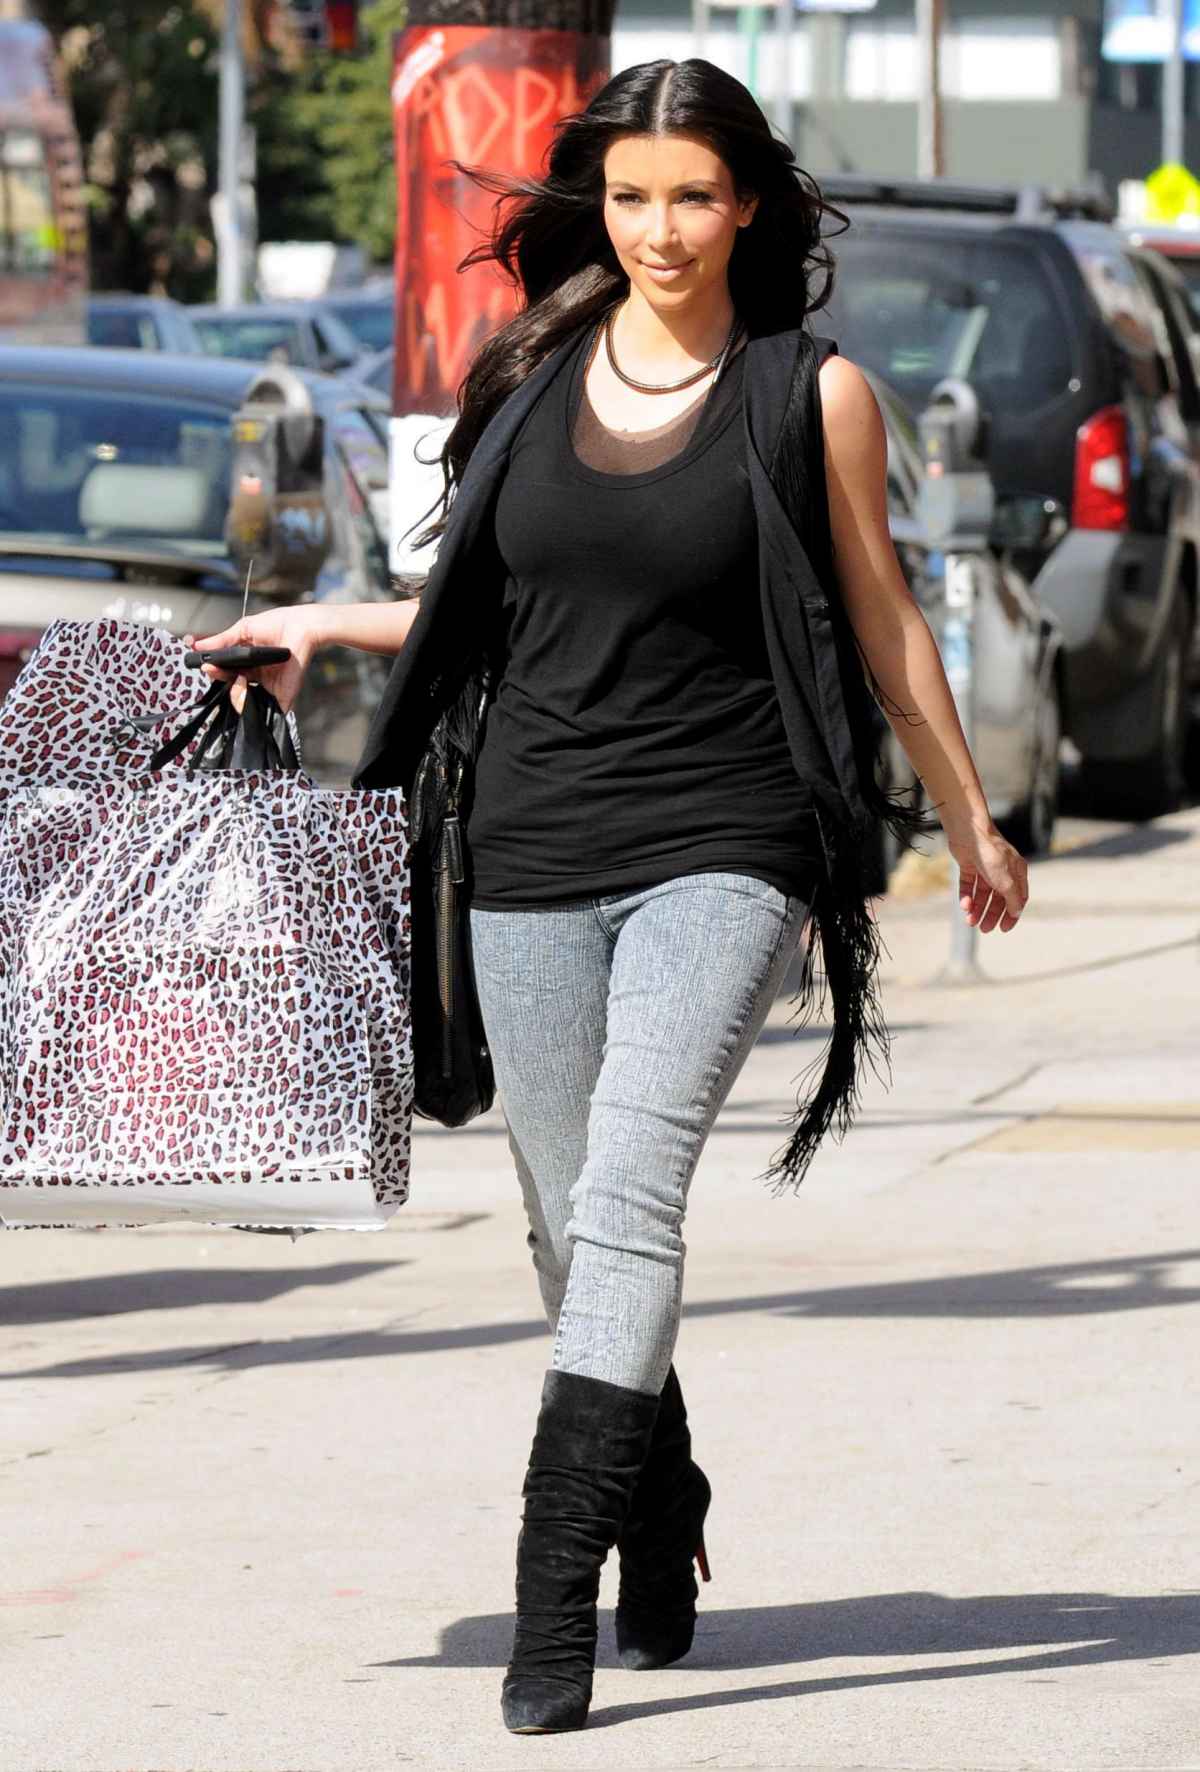 Kim Kardashian Working Out December 20, 2012 – Star Style